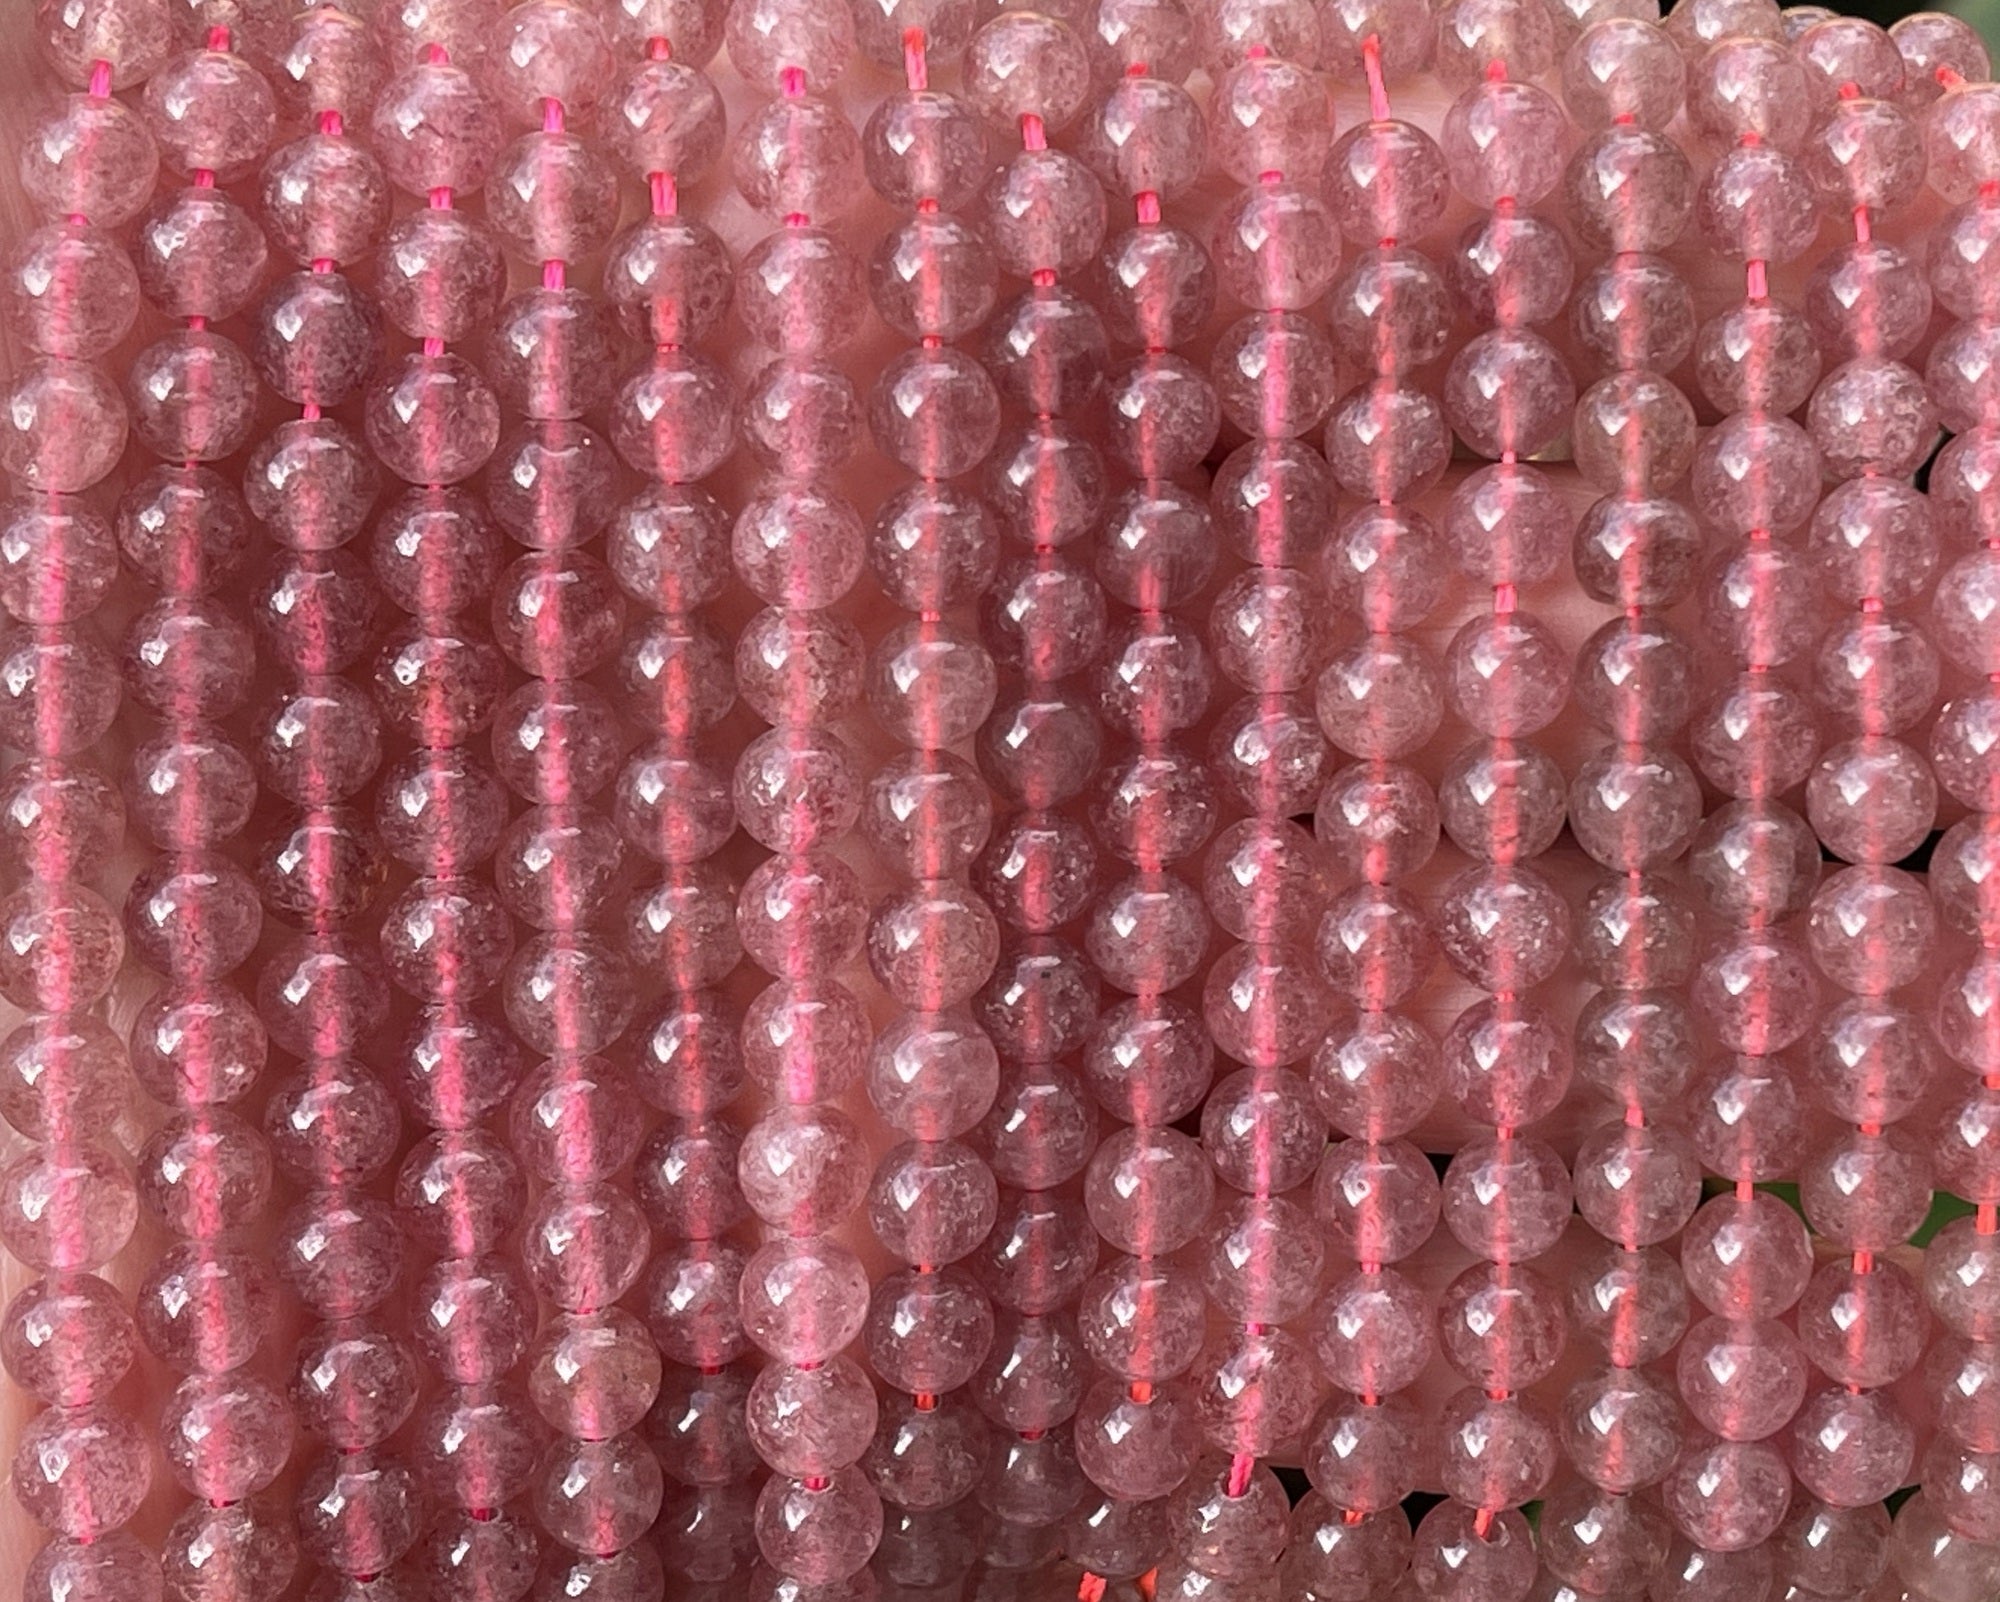 Strawberry Quartz 6mm round natural gemstone beads 15" strand - Oz Beads 